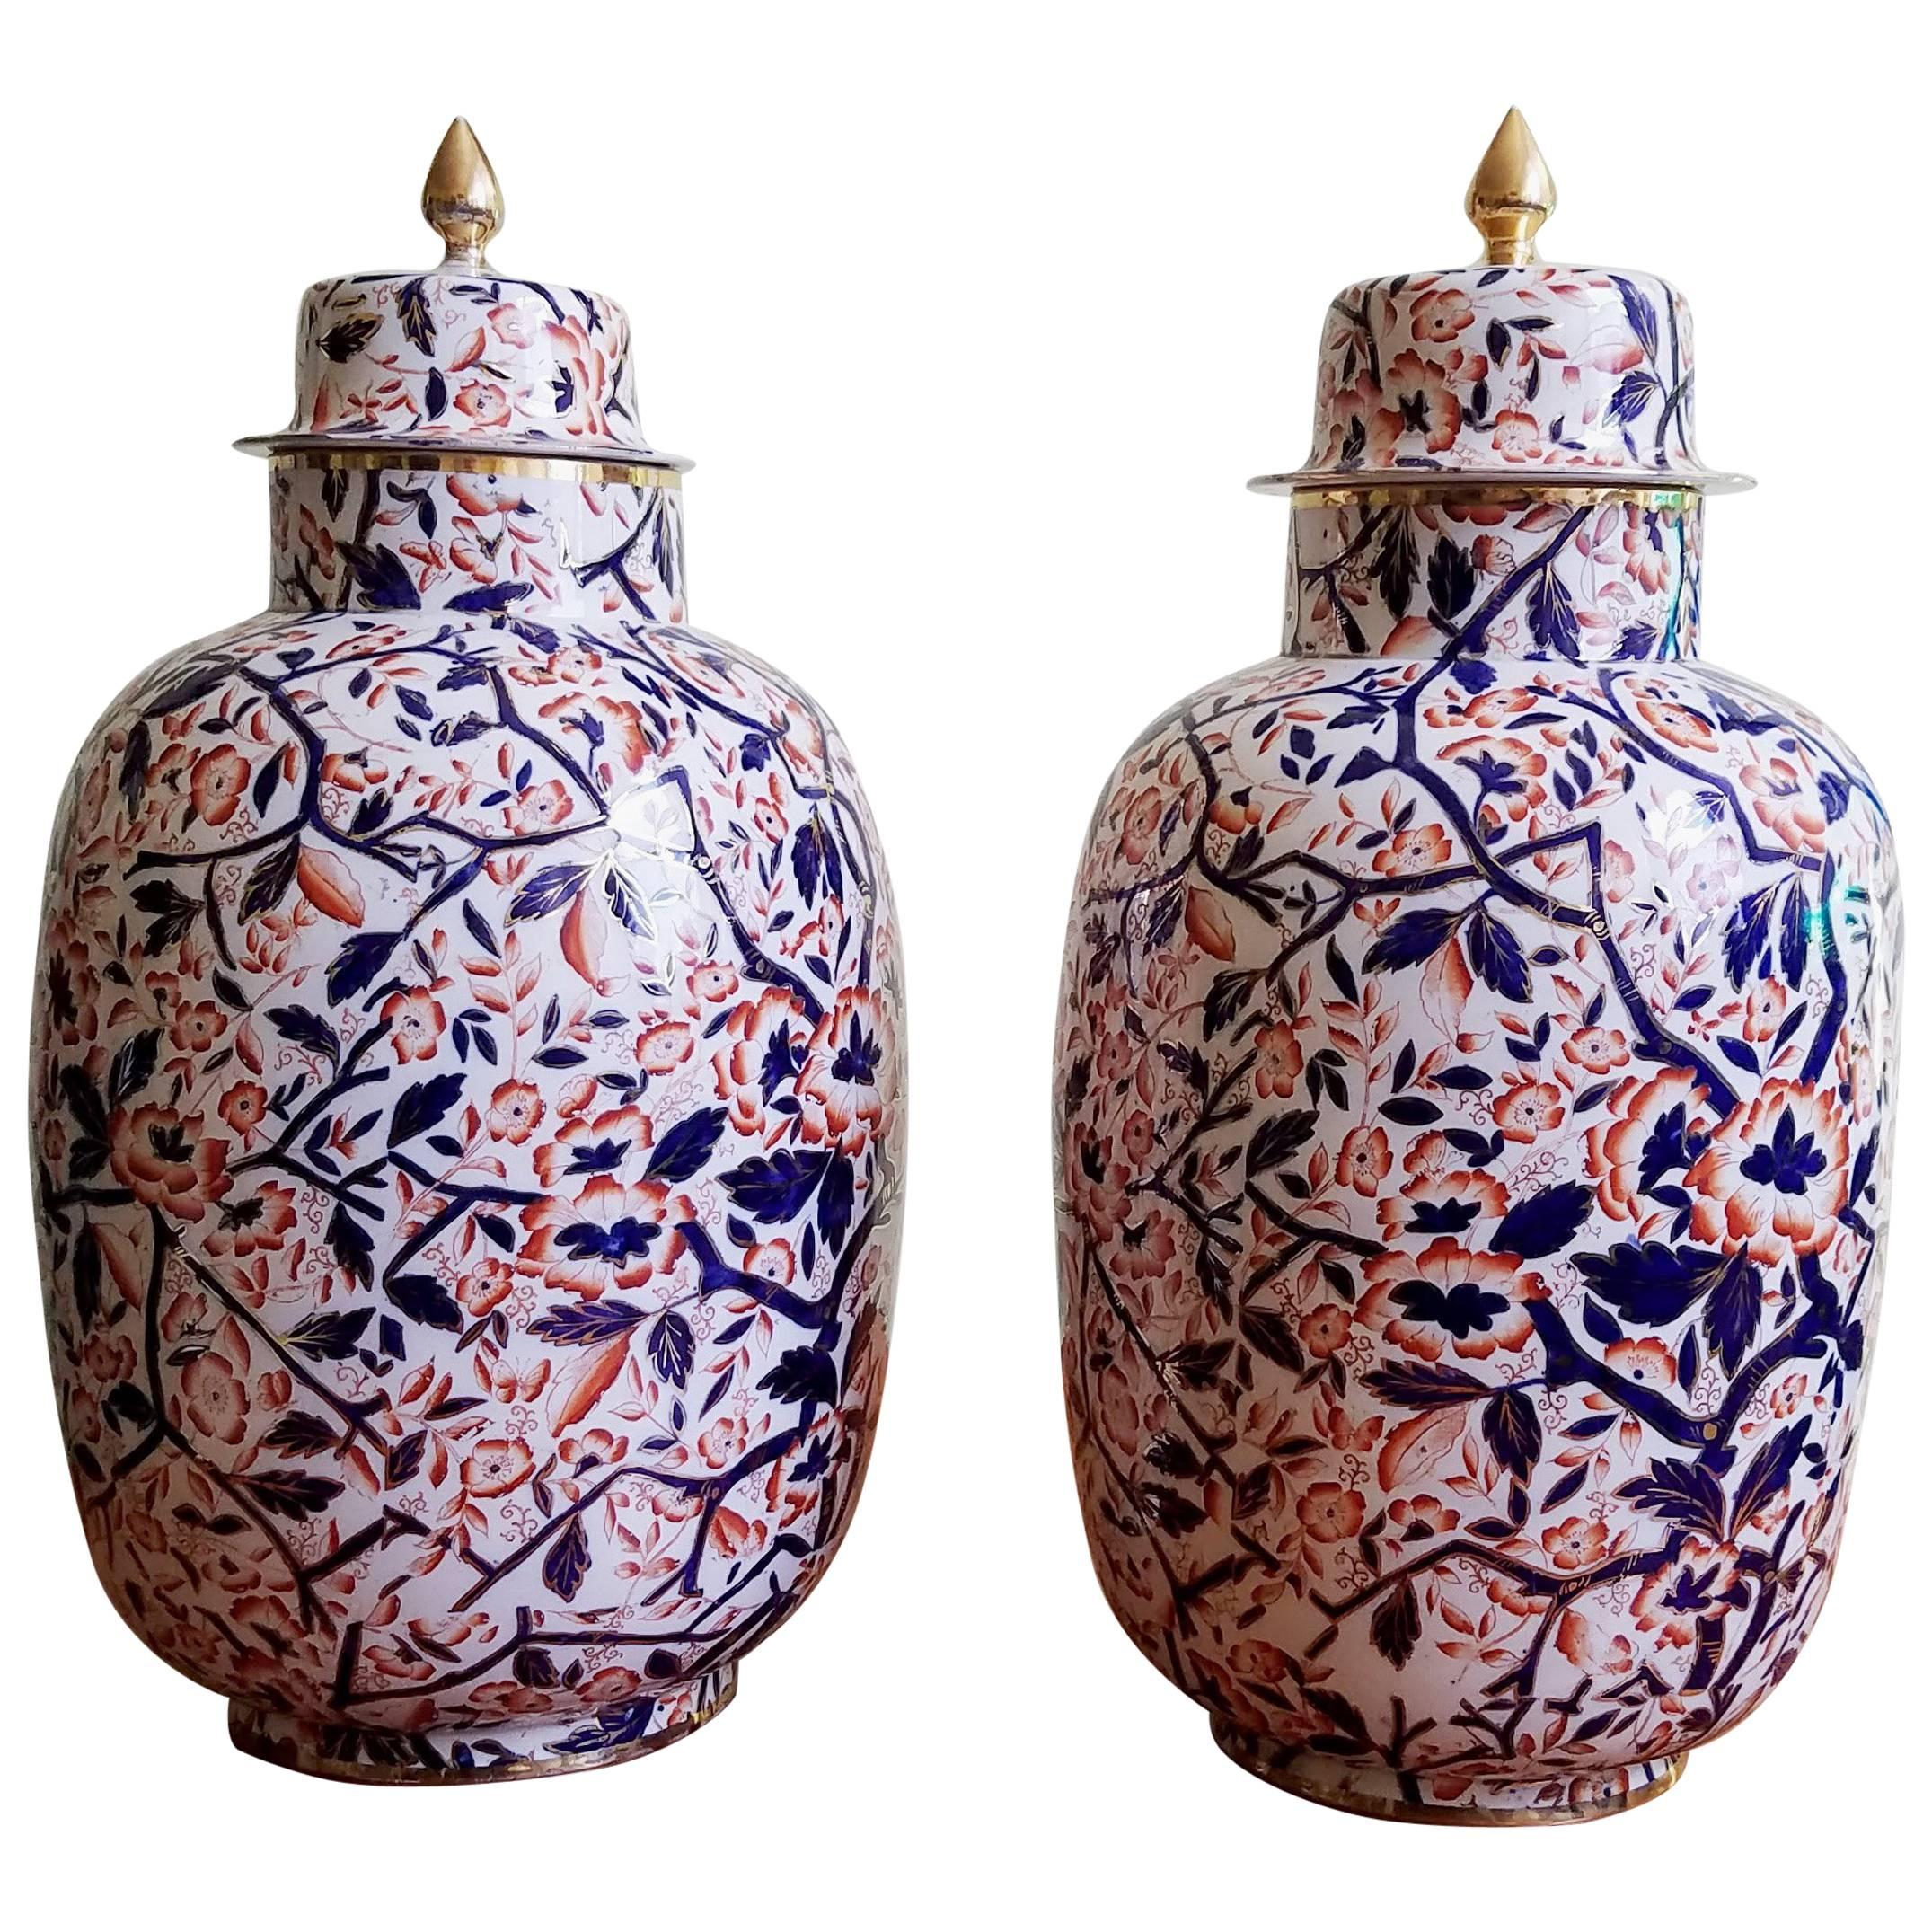 English Pottery Large Imari Vases and Covers, circa 1860-1880